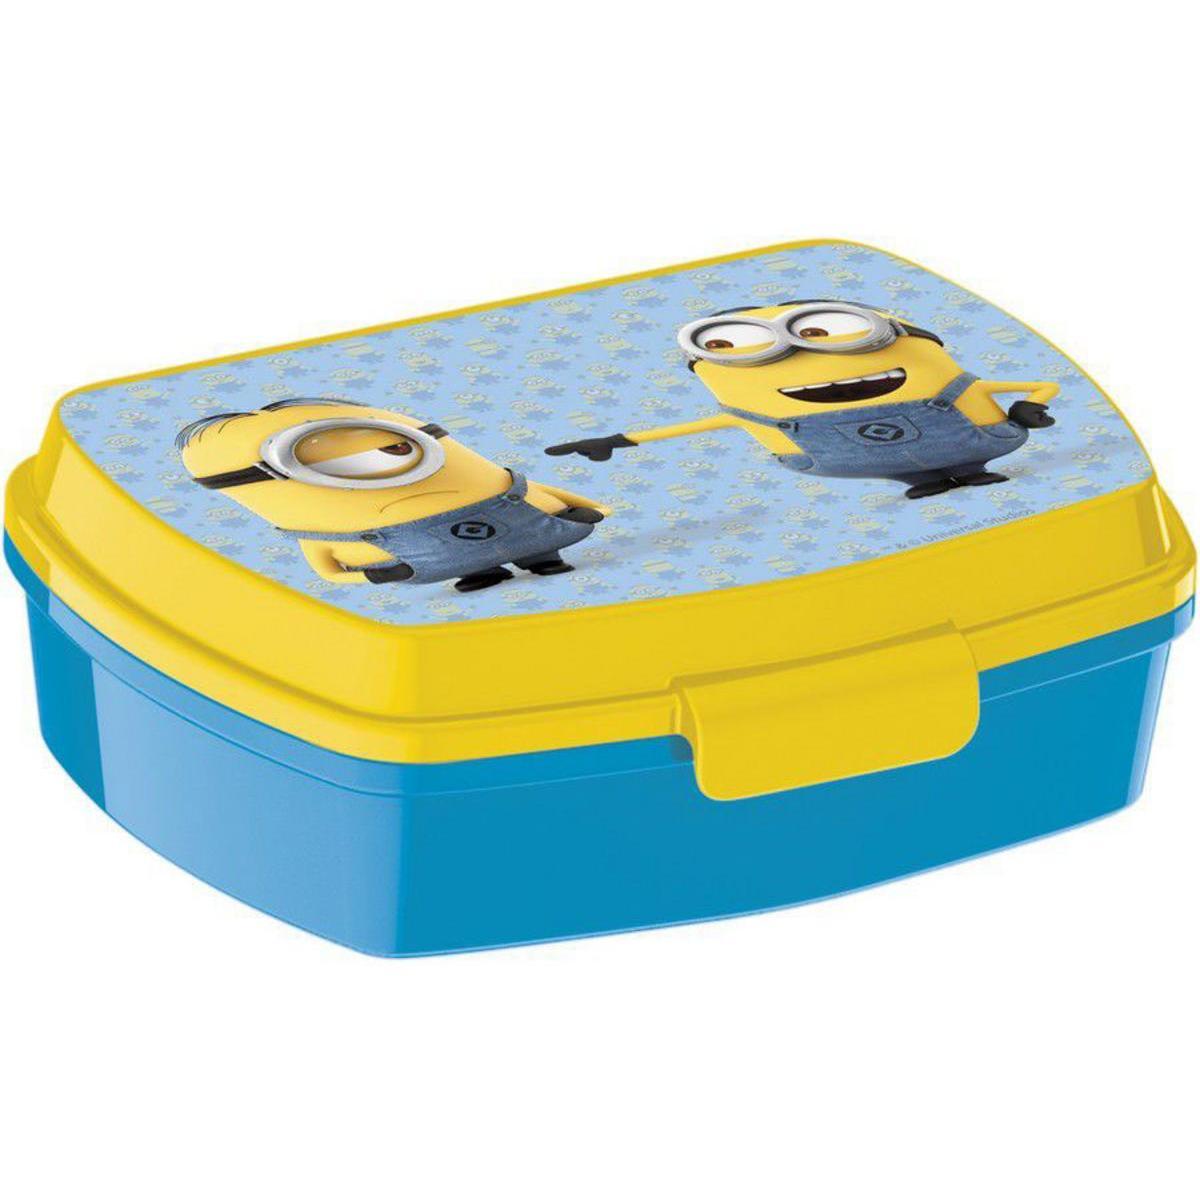 Lunch box Minions - Polypropylène - 17 x 14 x H 5,5 cm - Multicolore